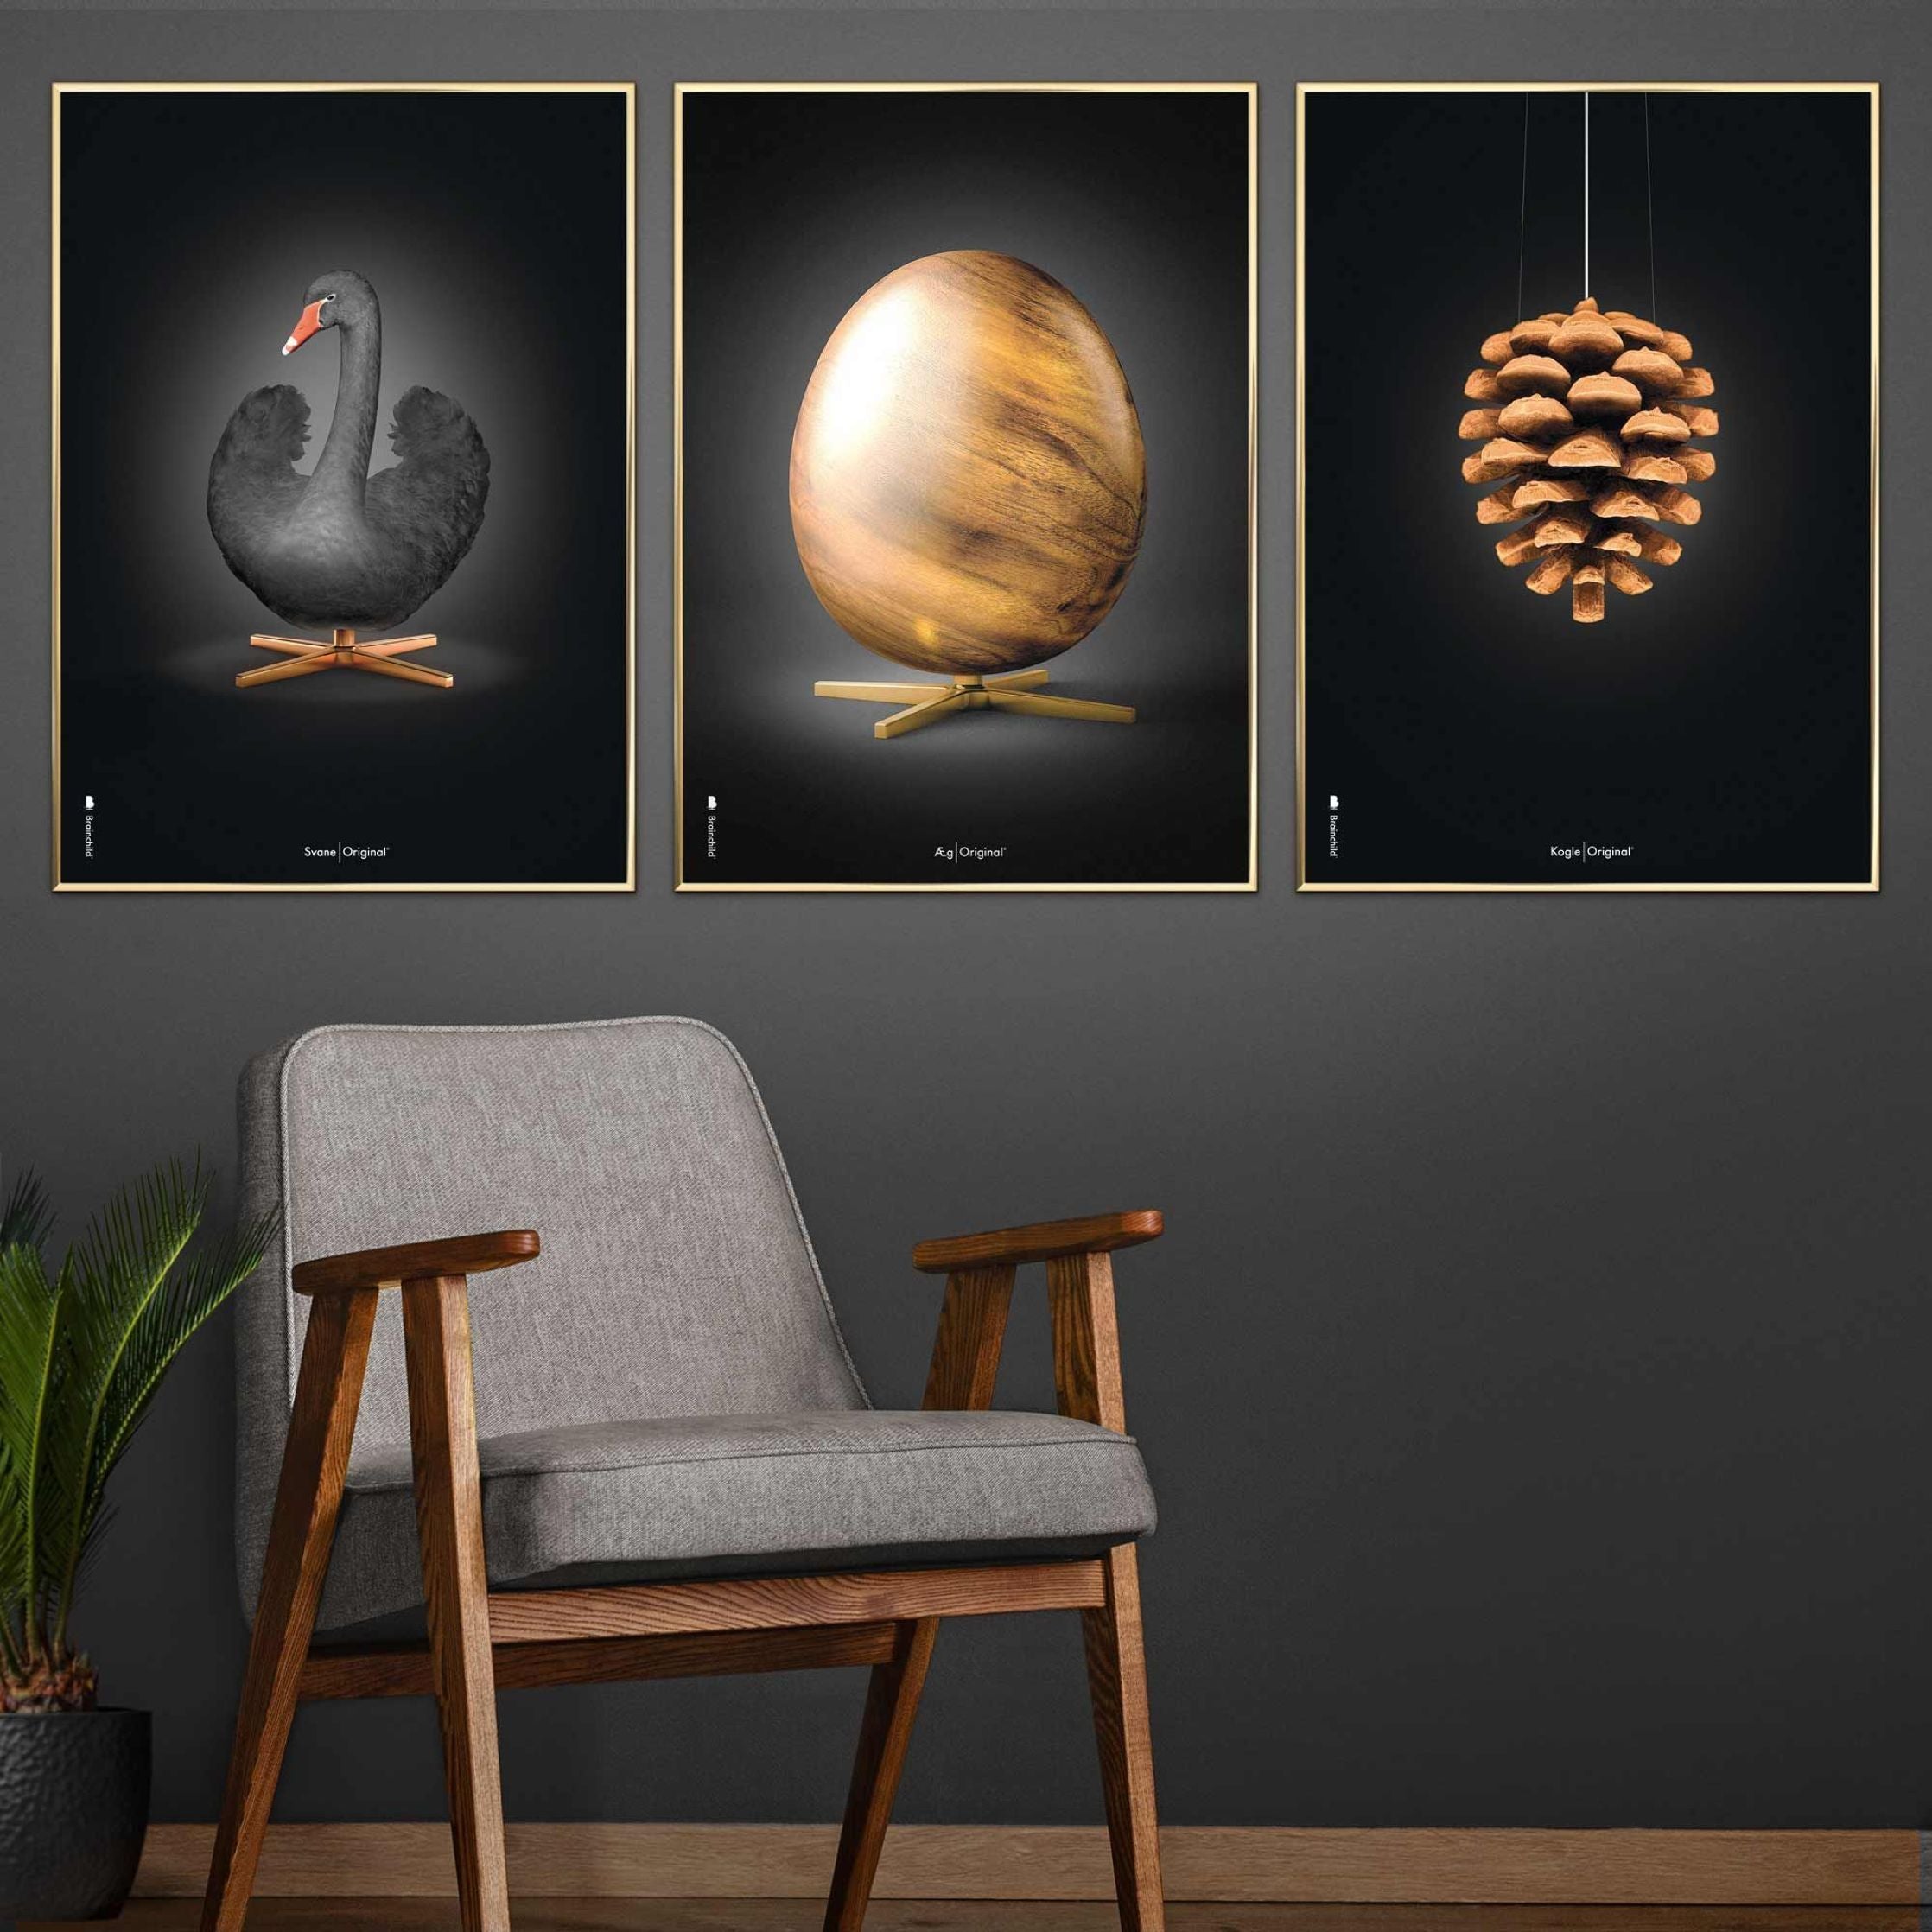 brainchild Eierfiguren Poster zonder frame 50x70 cm, zwart